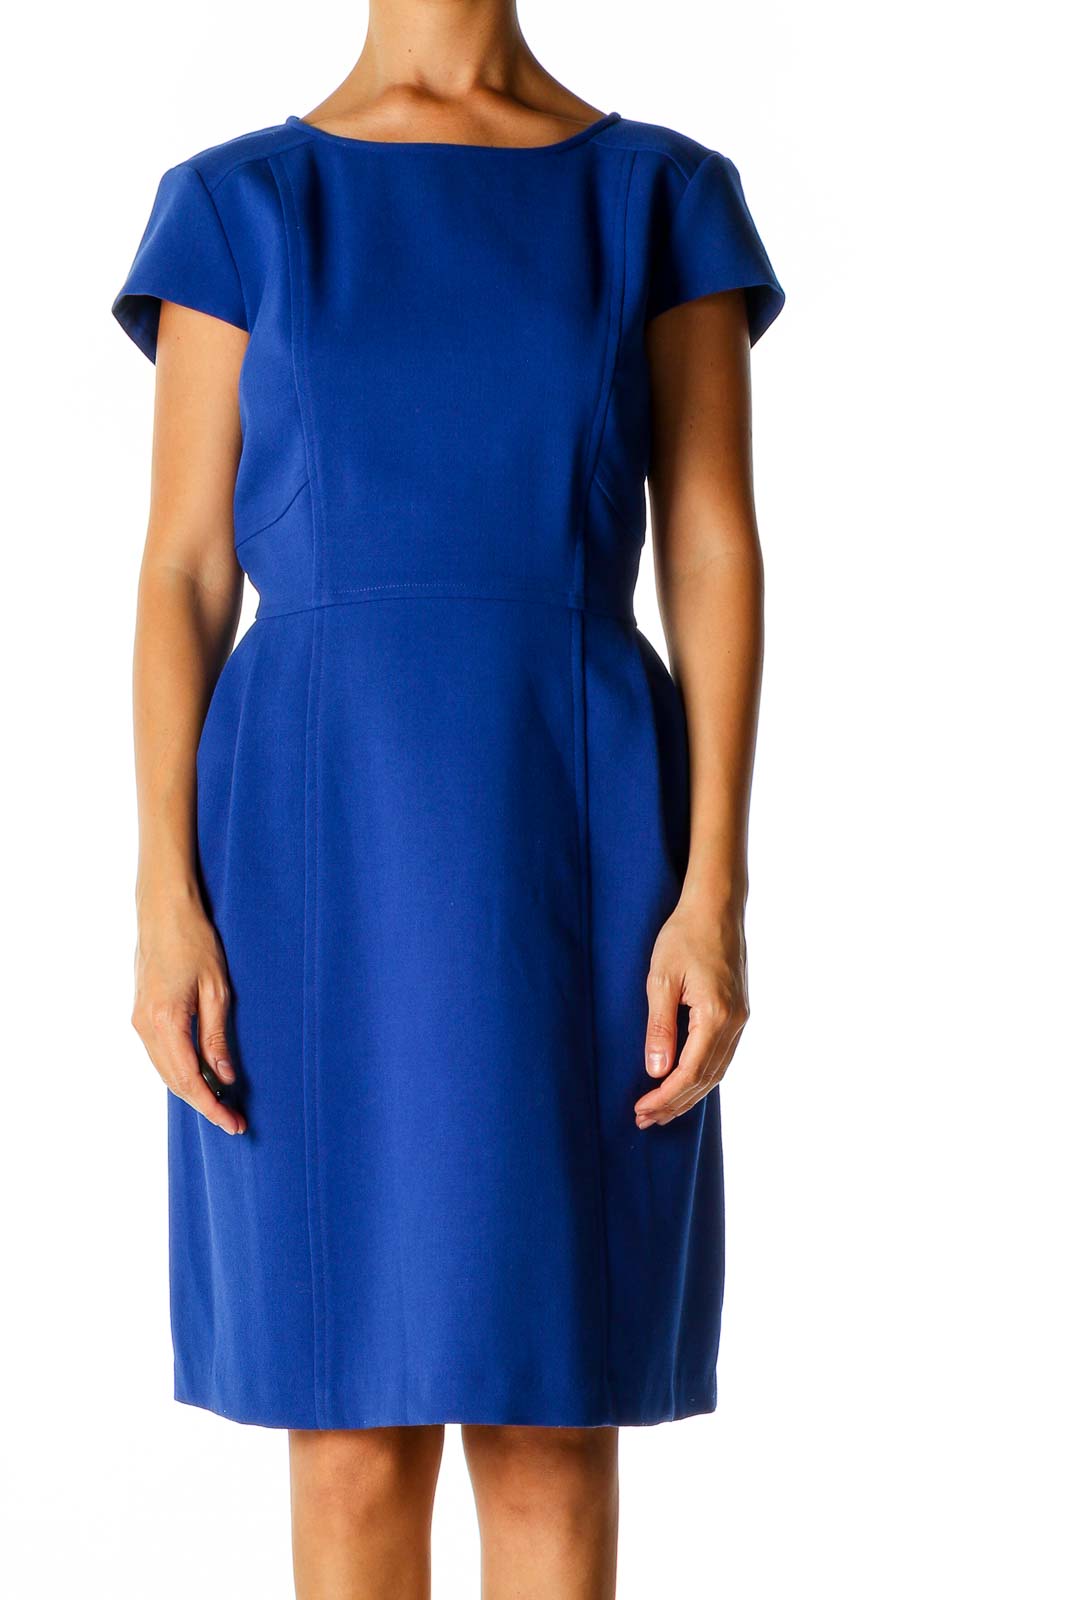 Blue Solid Classic Sheath Dress Front